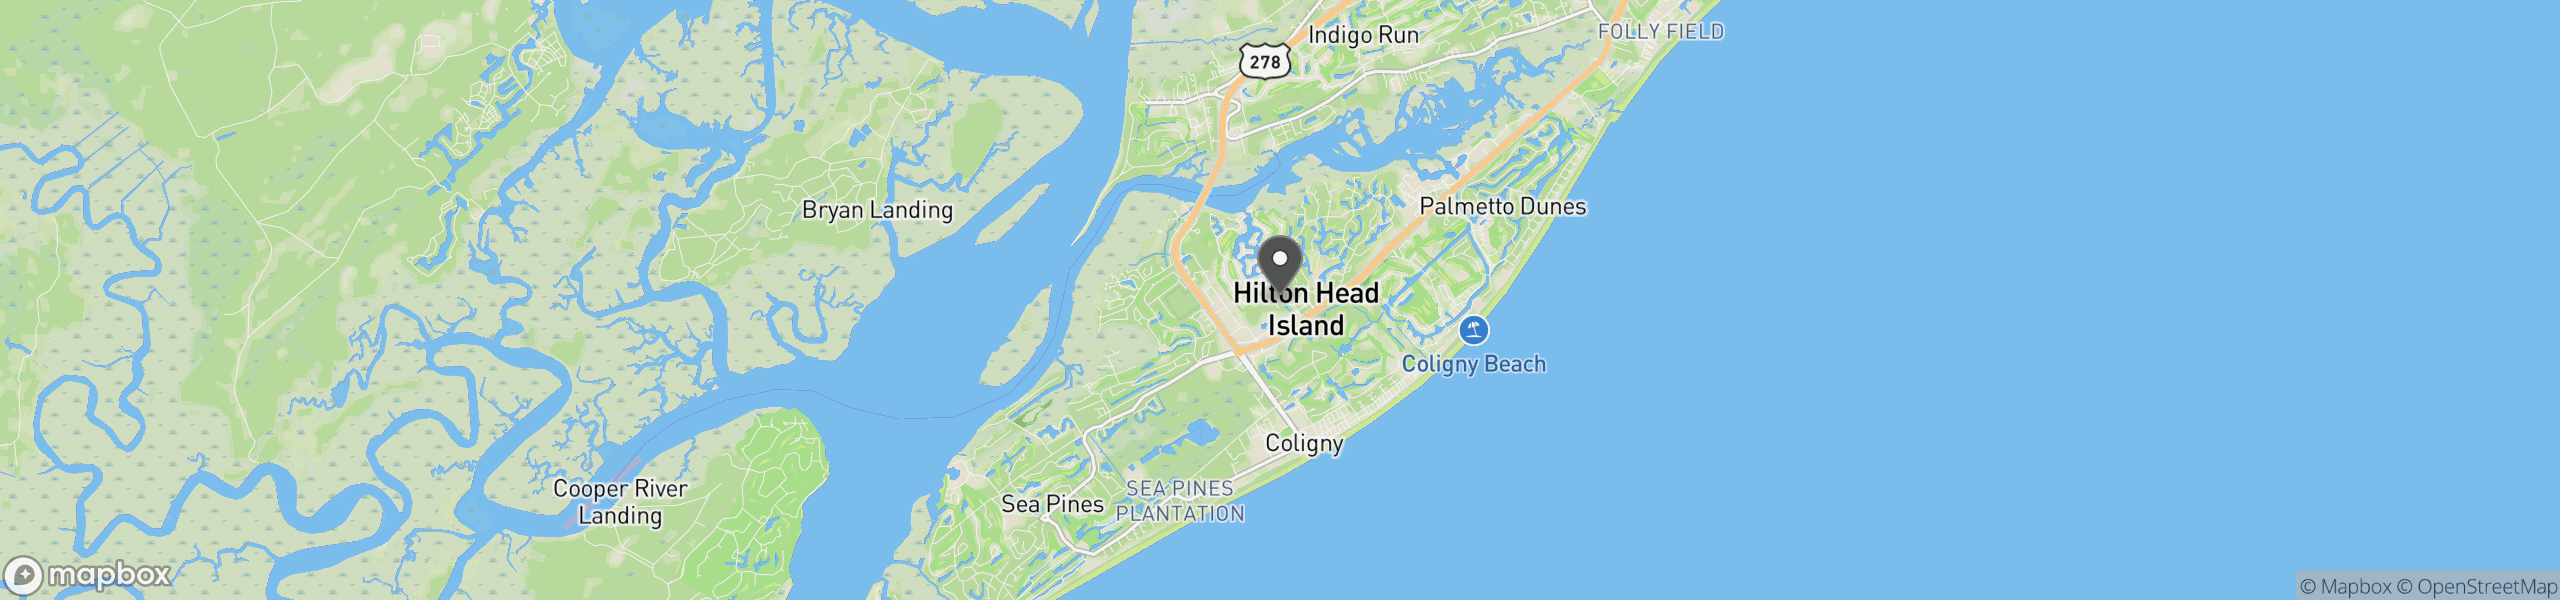 Hilton Head Island, SC 29928